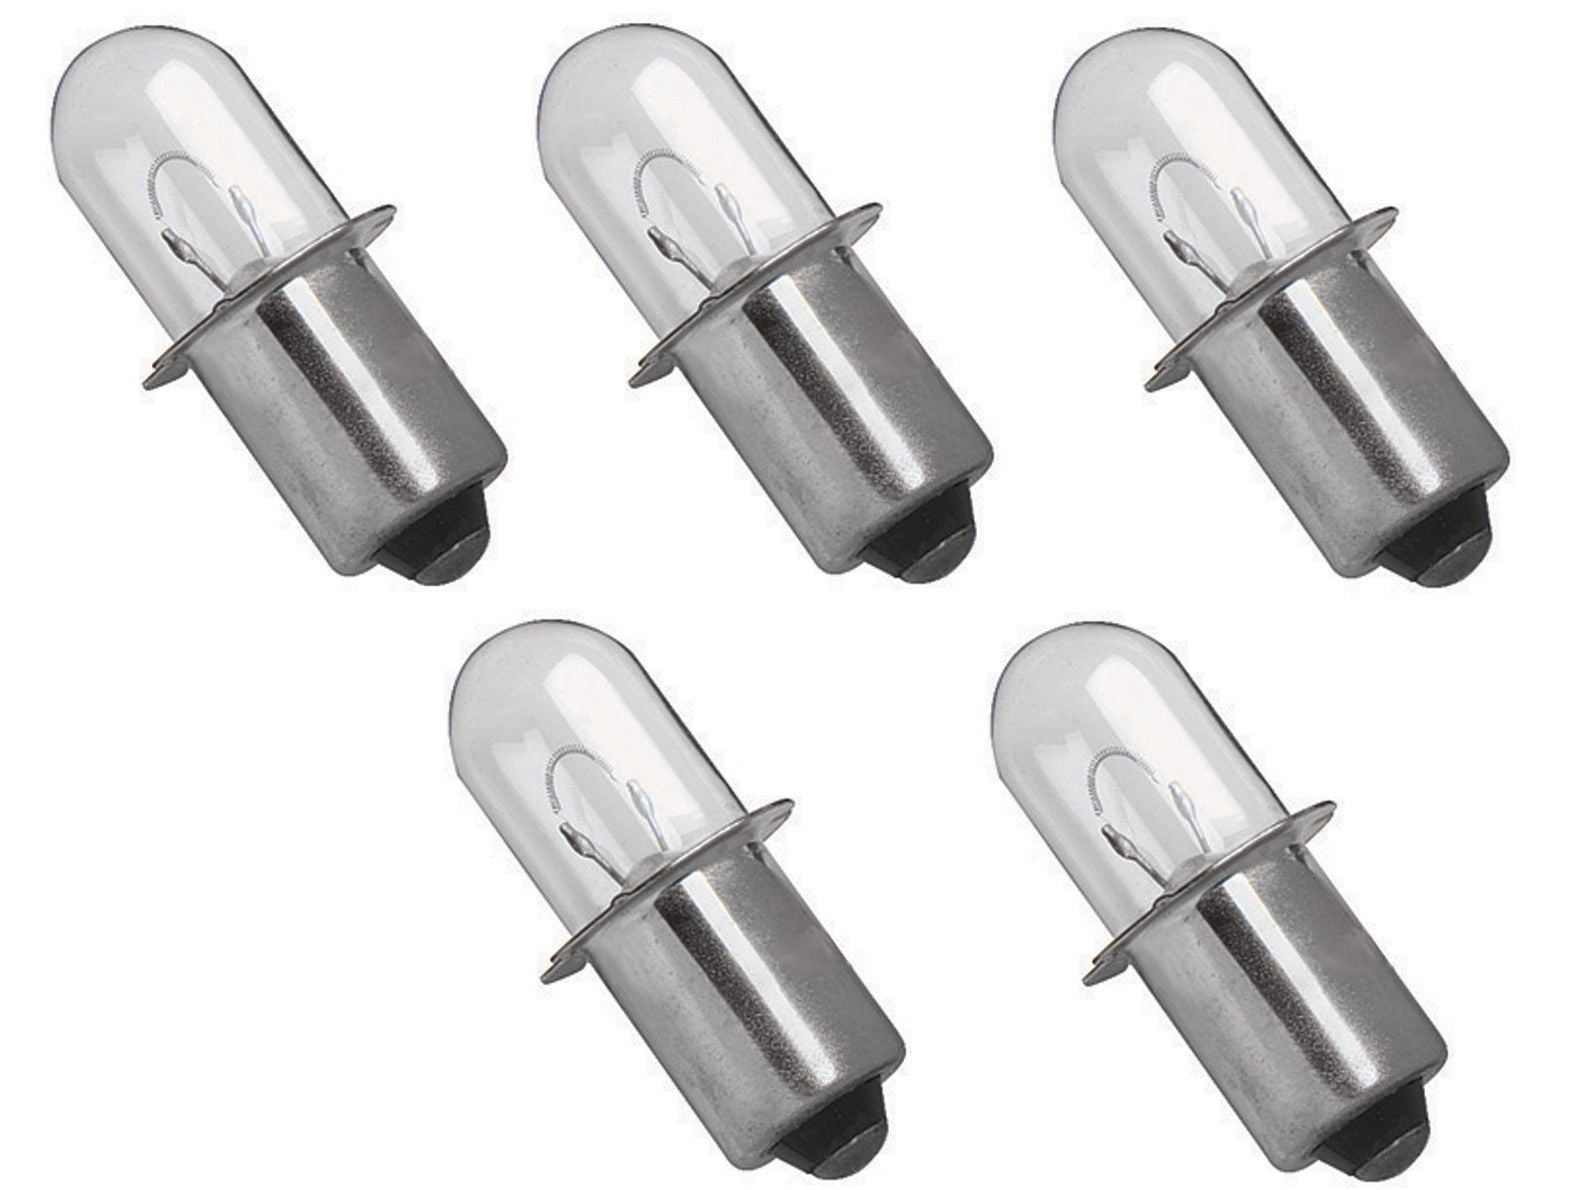 2pcs High Power Upgrade Bulbs 3W LED 100LM for Dewalt 900 9000 Series Flashlight 